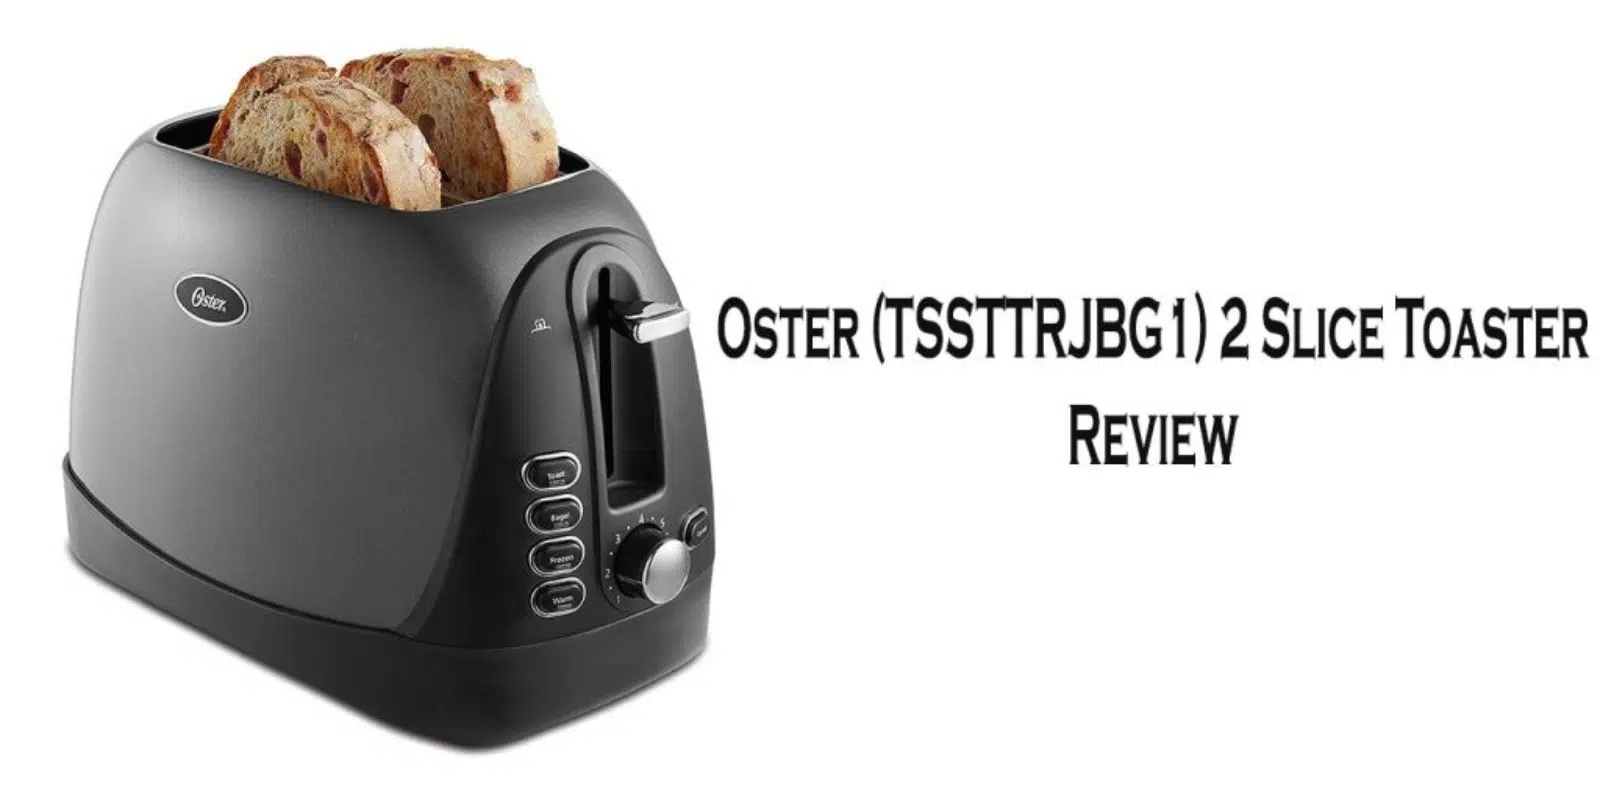 Oster (TSSTTRJBG1) 2 Slice Toaster Review – (2021)